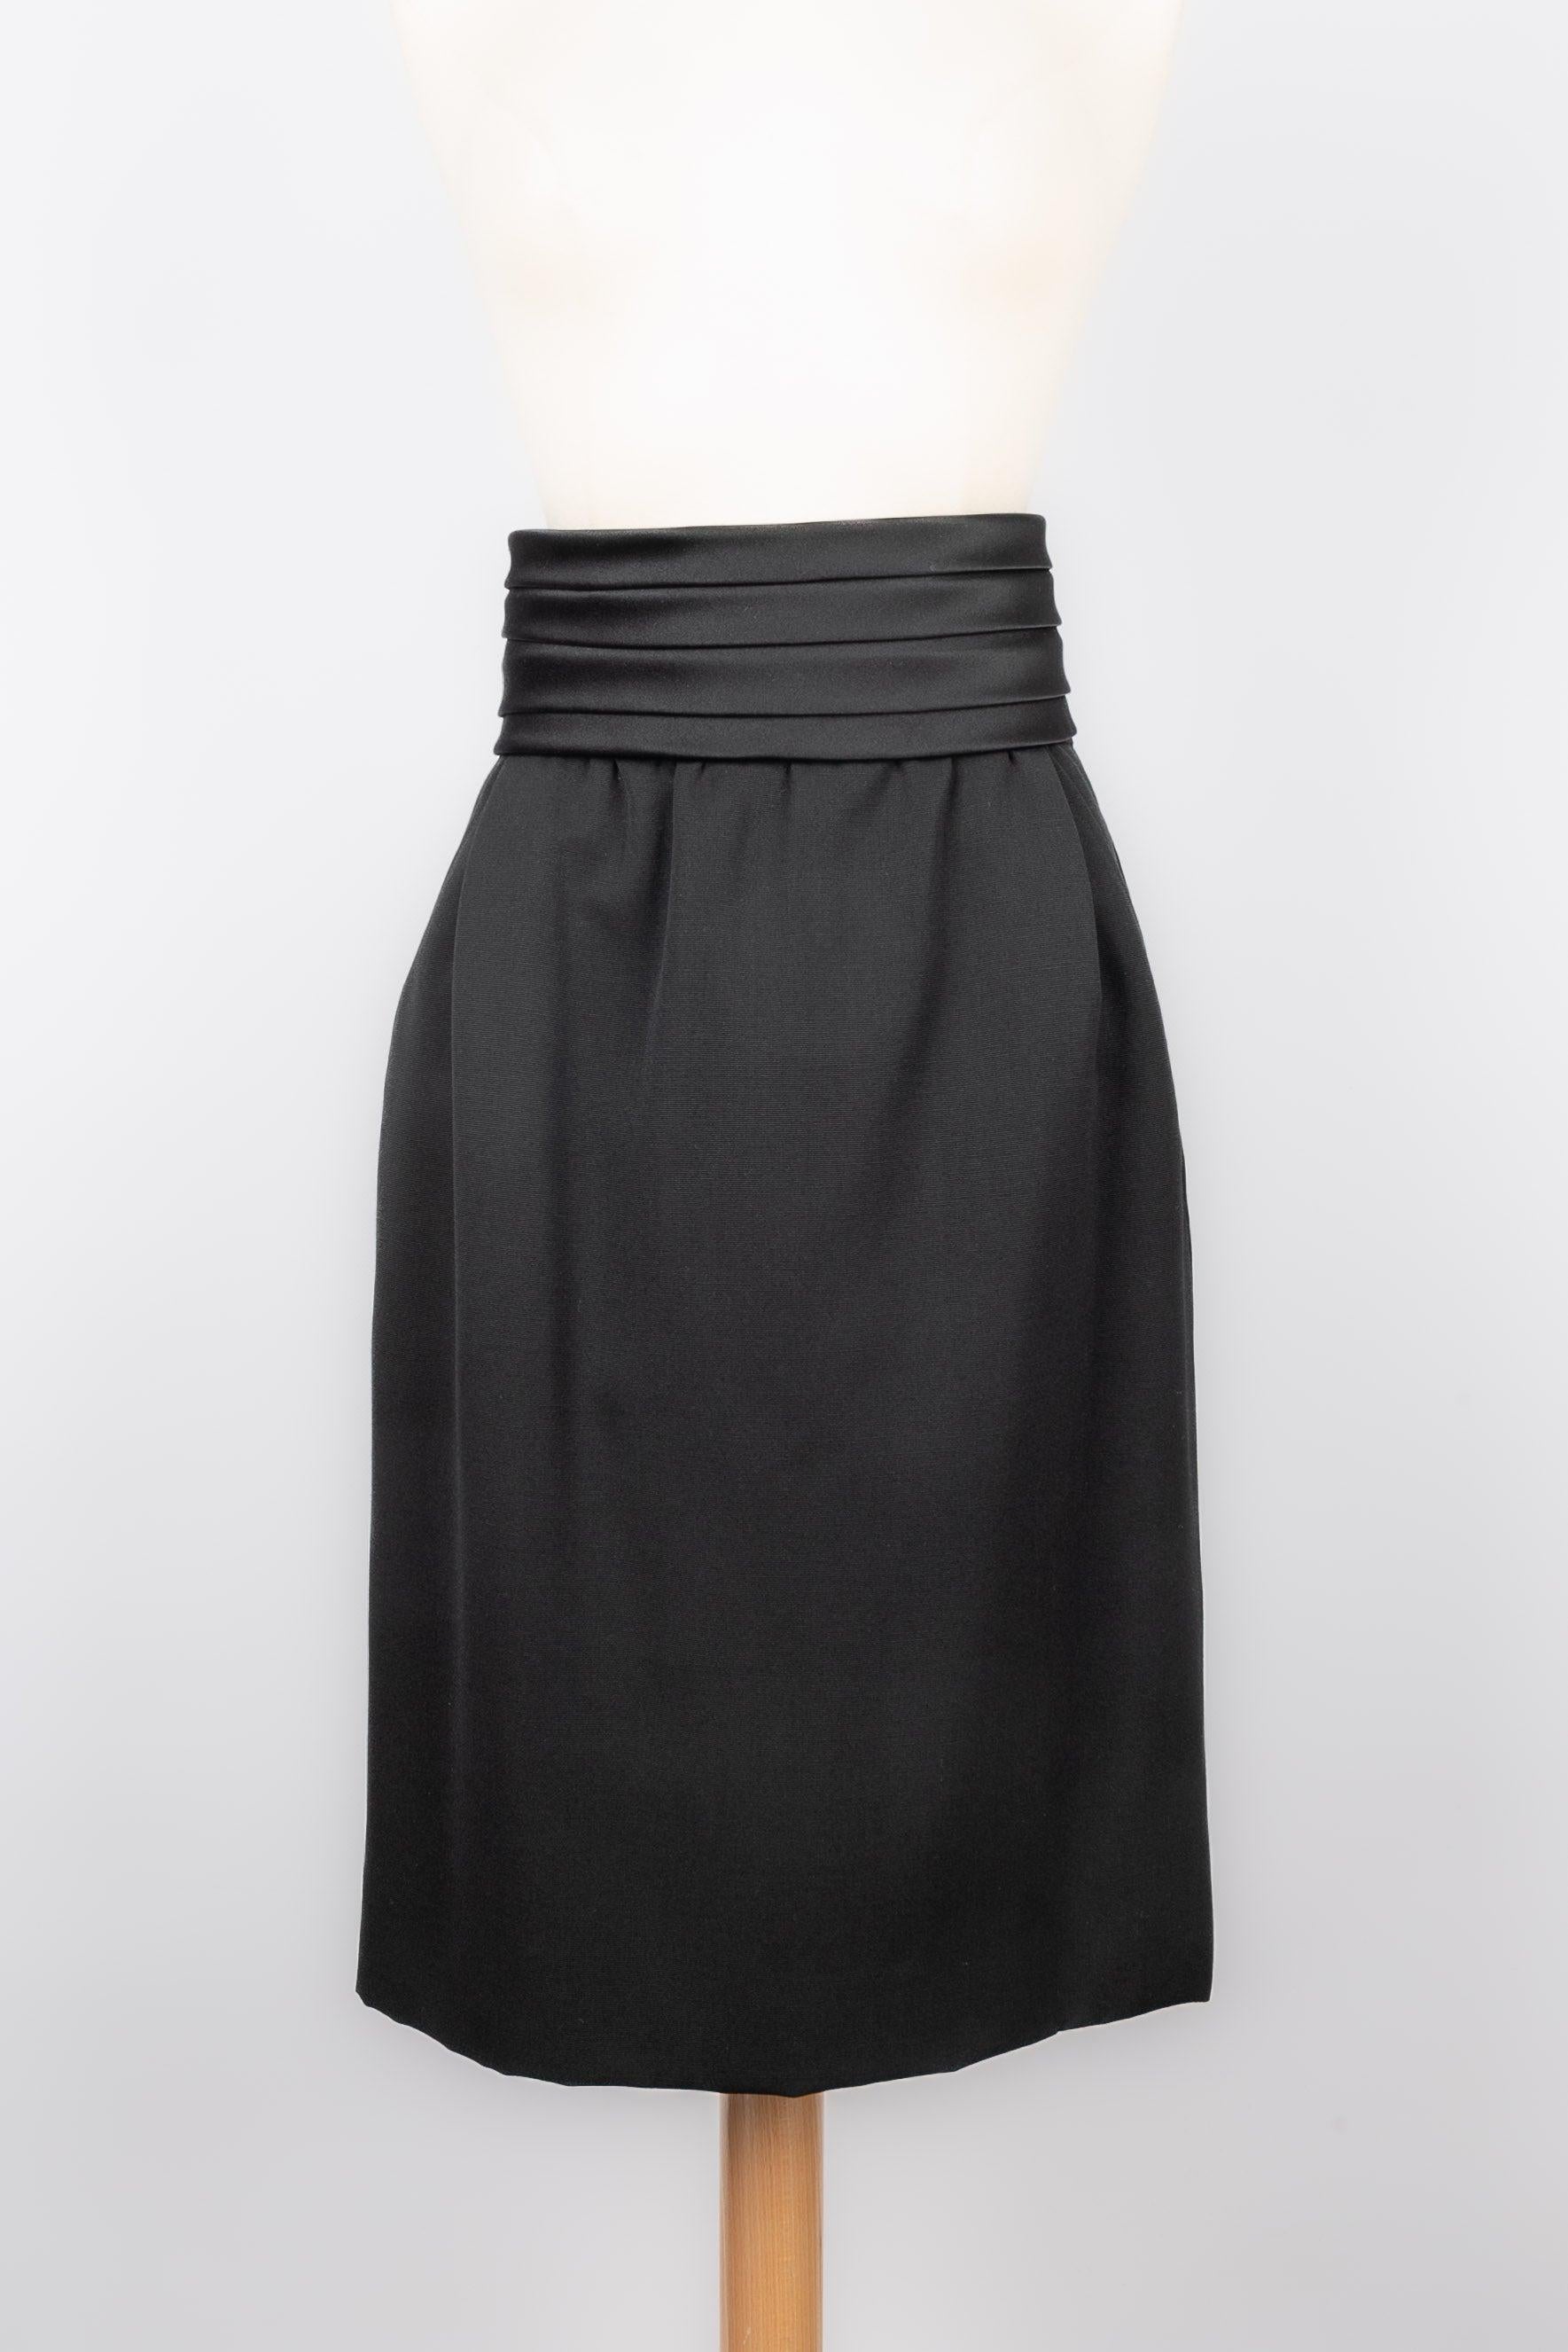 Yves Saint Laurent Black Skirt Suit Enlivened with Satin Belt Haute Couture For Sale 2